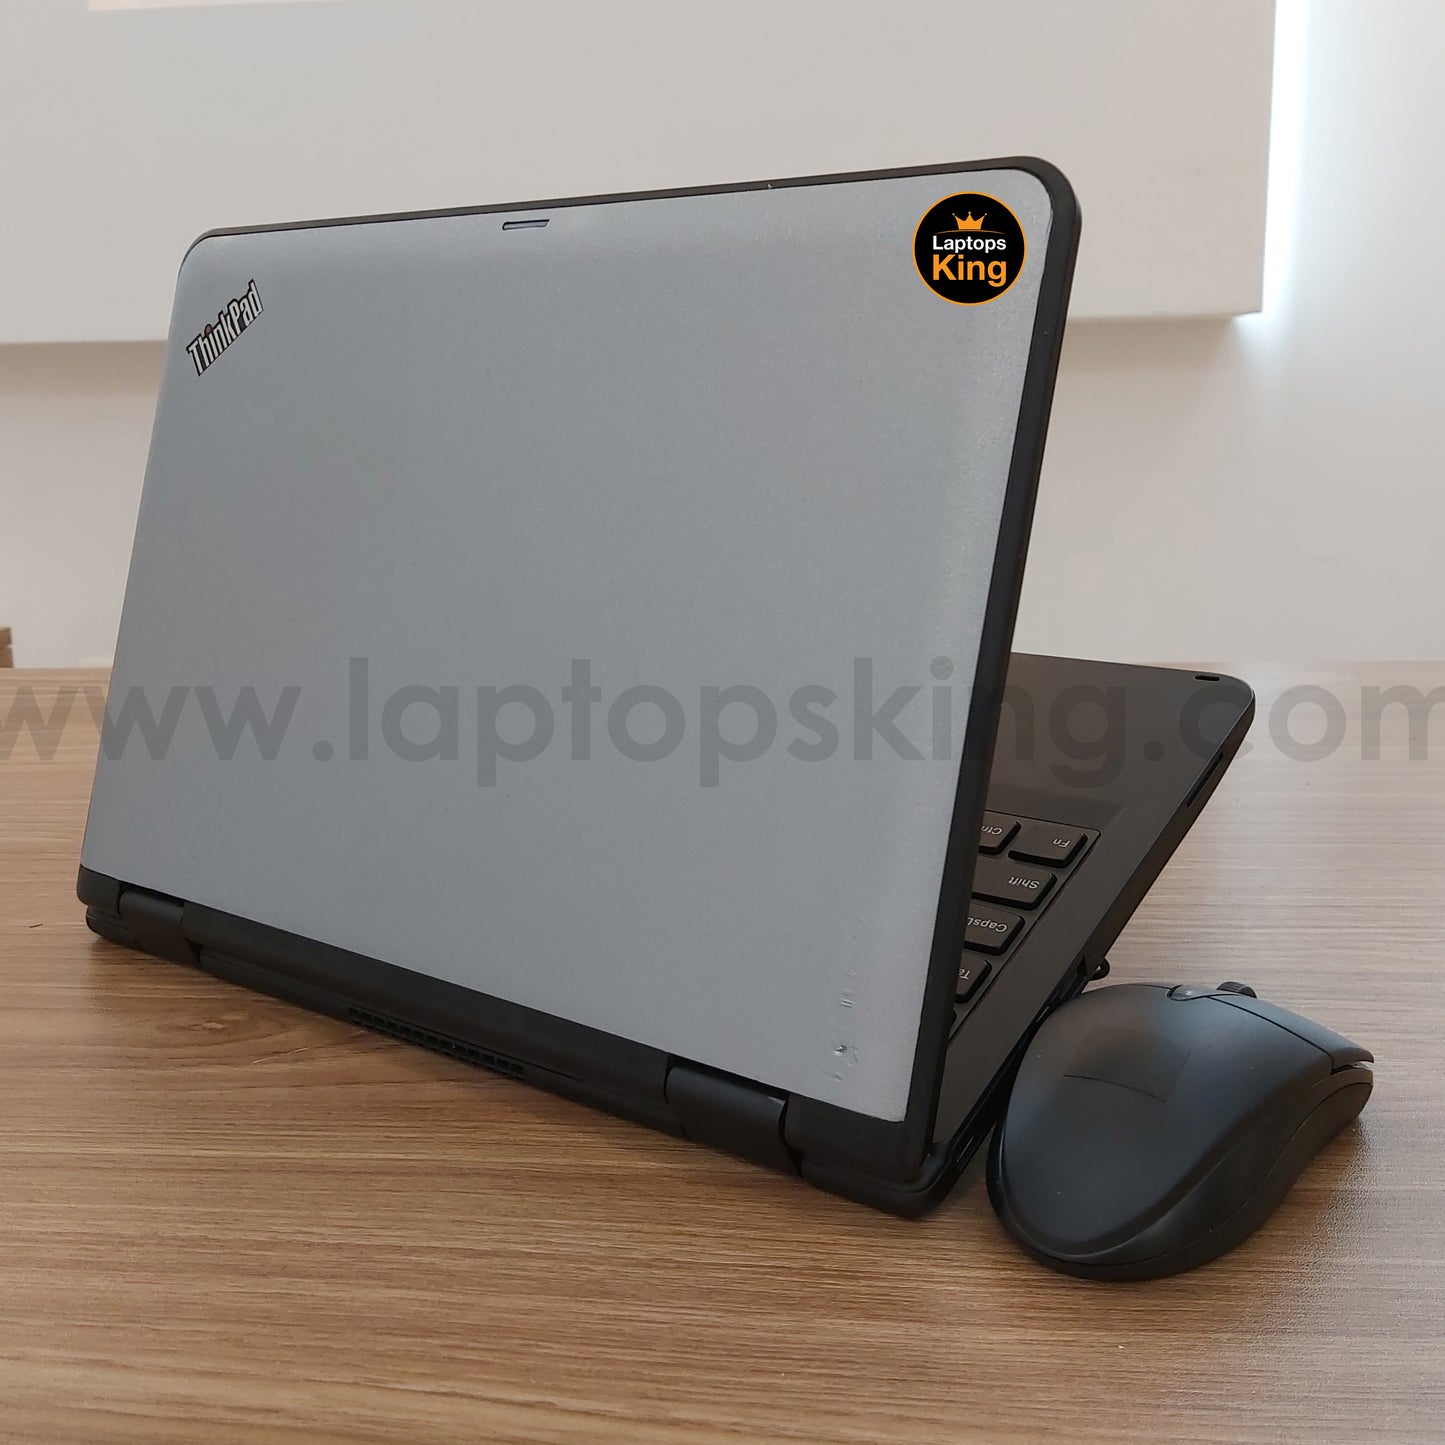 Lenovo ThinkPad Yoga 11e 2in1 Laptop (Used Very Clean)